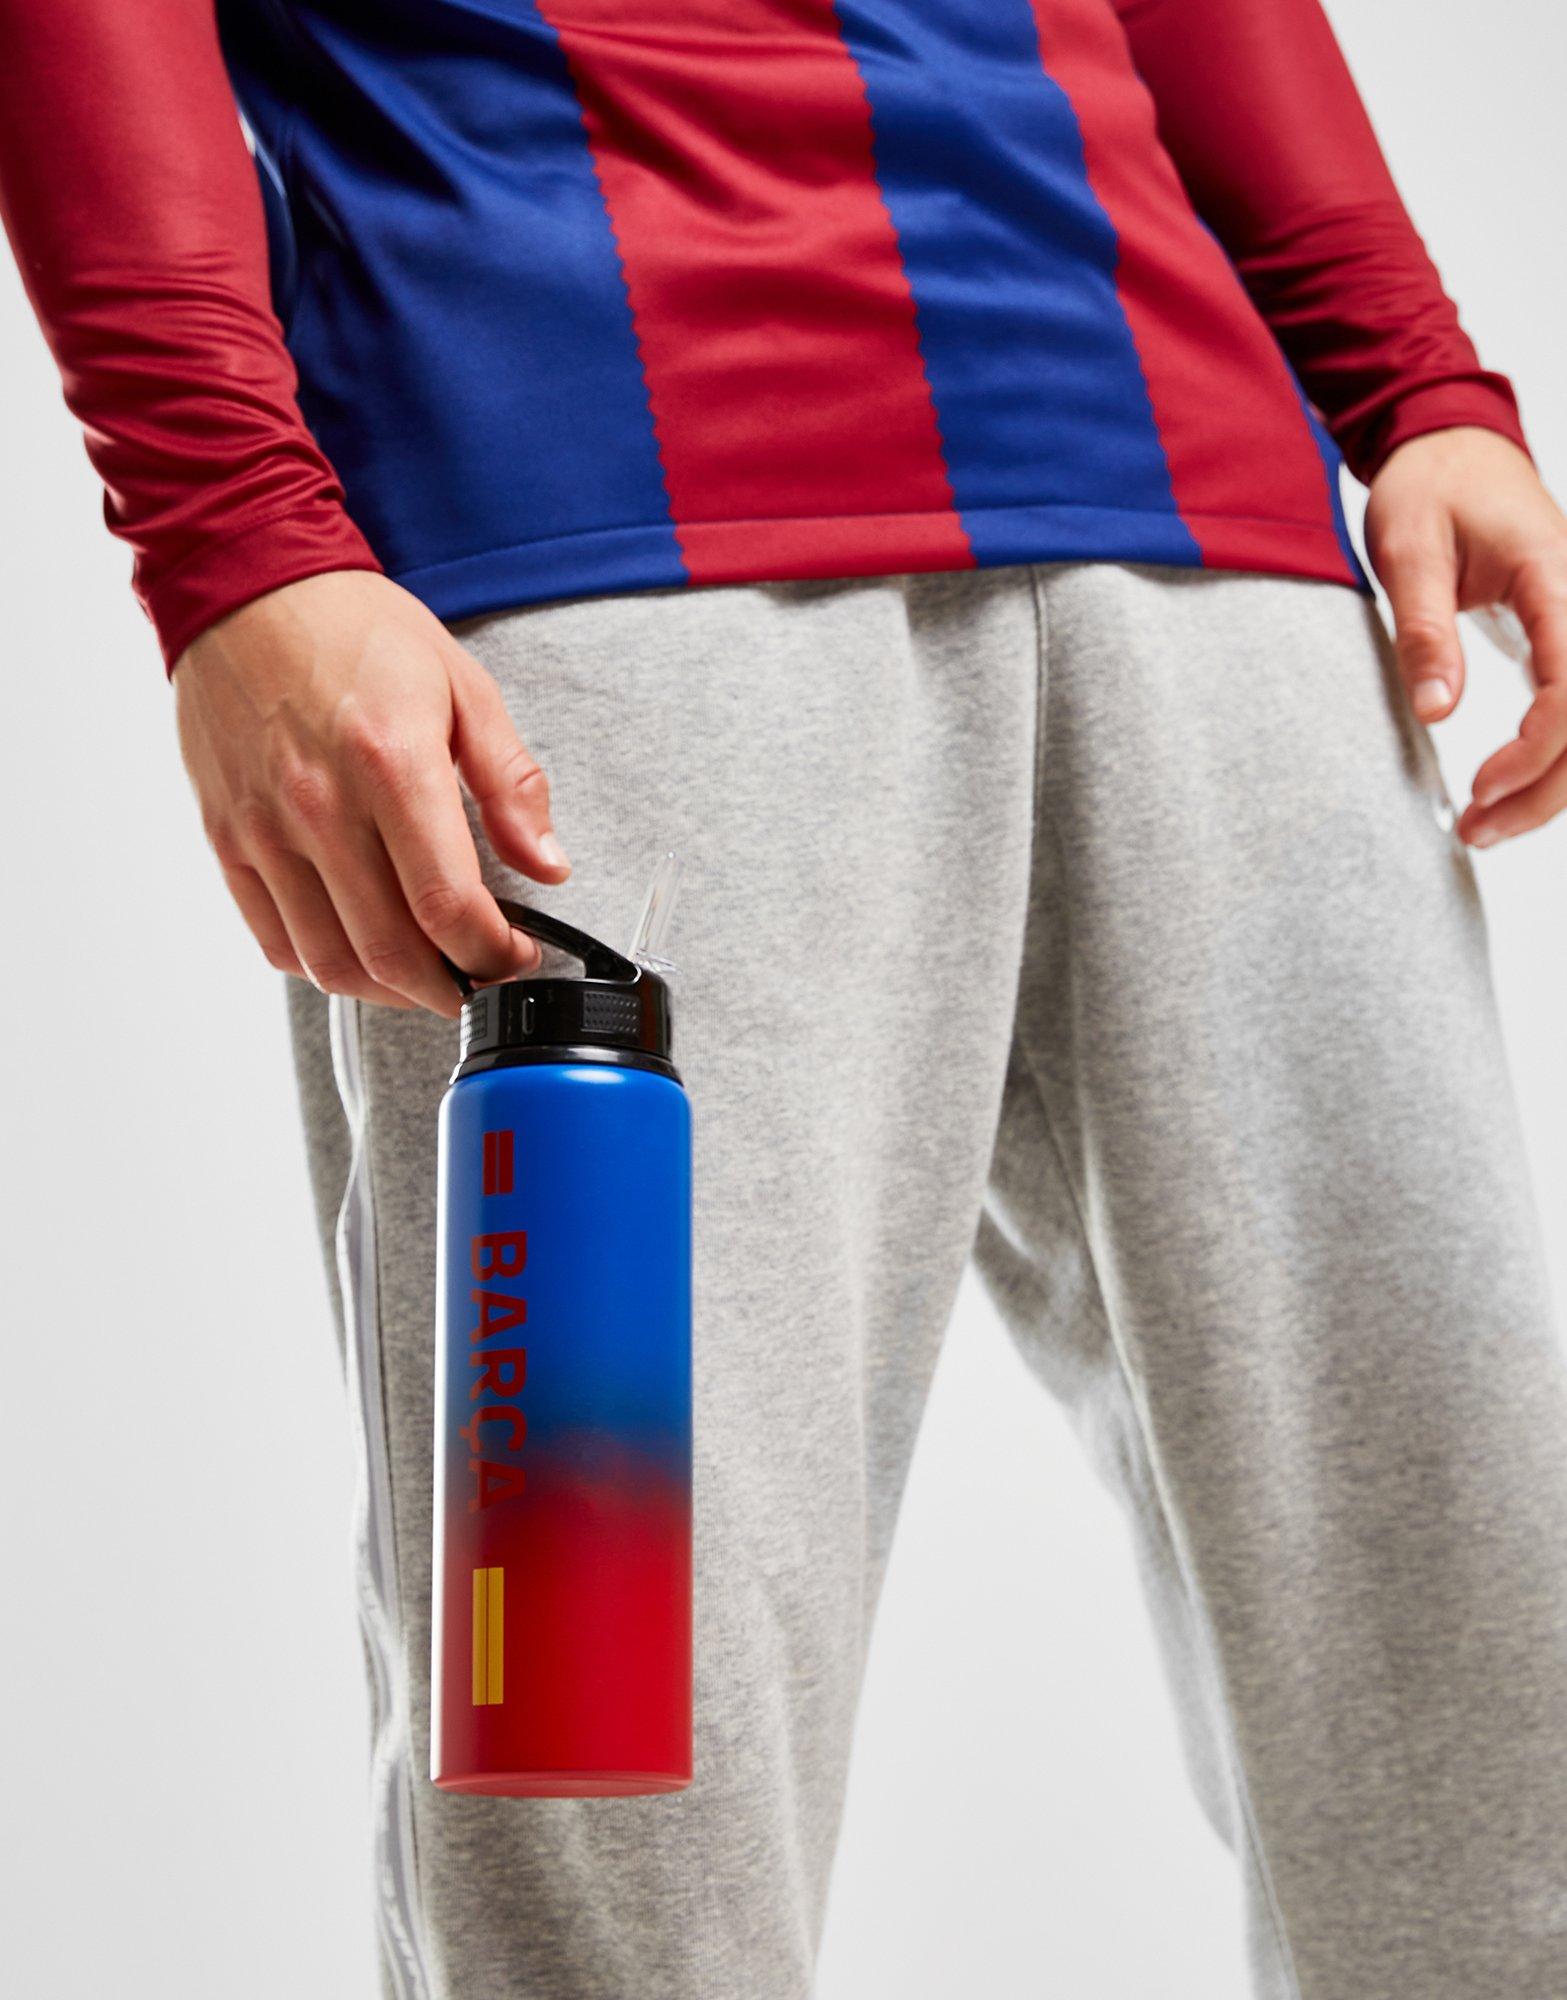 FC Barcelona Men's Team - Aquafigure Bottle including 5 Players